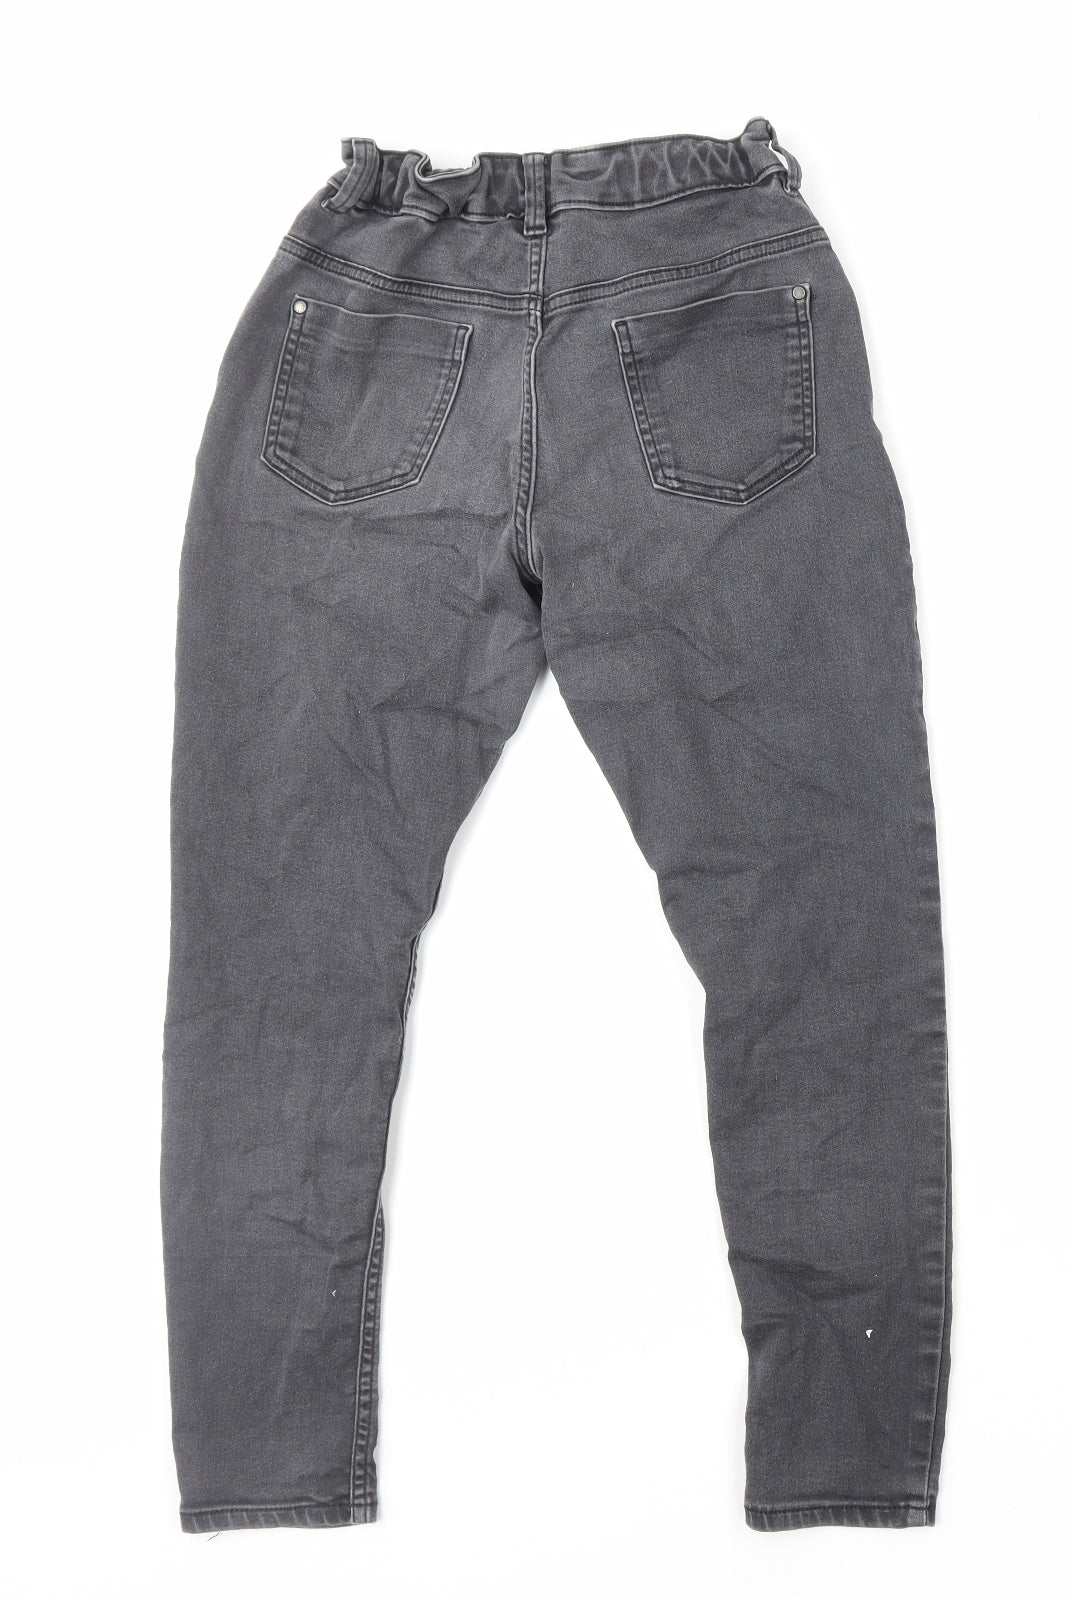 F&F Girls Grey Cotton Skinny Jeans Size 12-13 Years L24 in Regular Zip